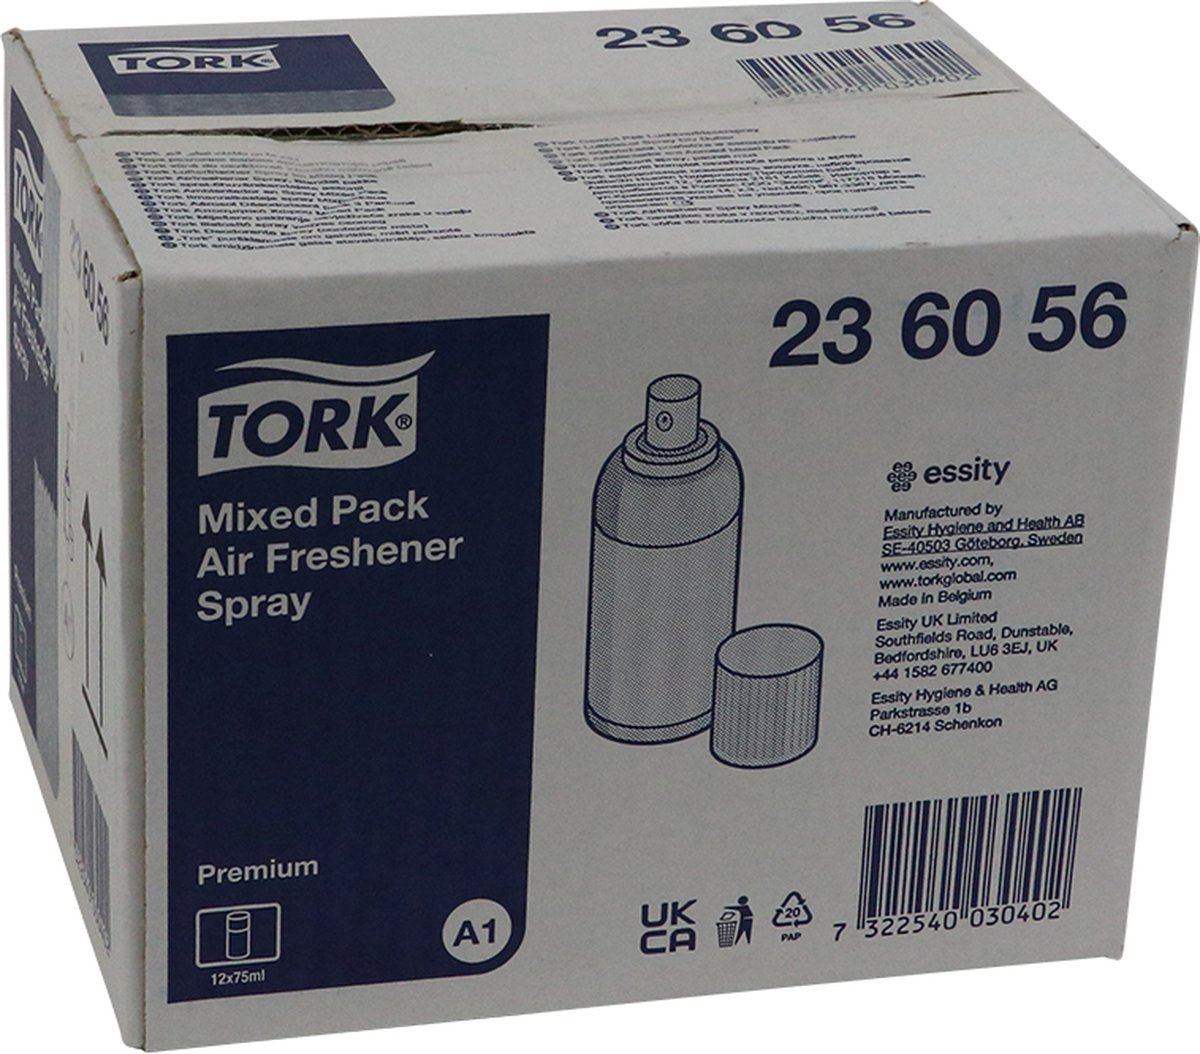 Voordeelverpakking 3 X Tork Luchtverfrisser Spray mix pakket 3 Parfums A1, aerosol, 12x75ml (236056)